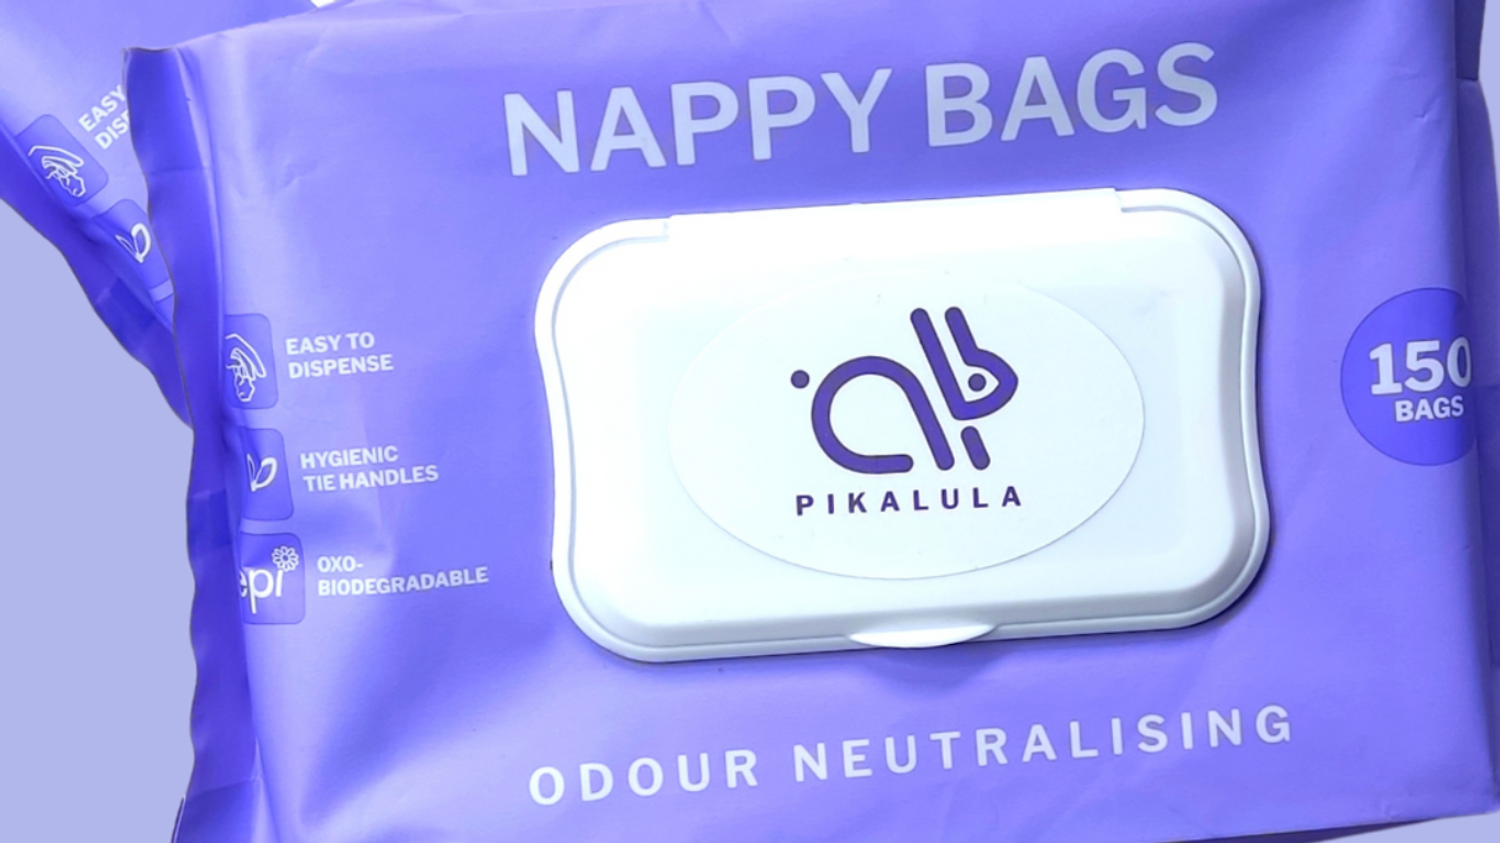 Pikalula | ORDER YOUR PIKALULA NAPPY BAGS